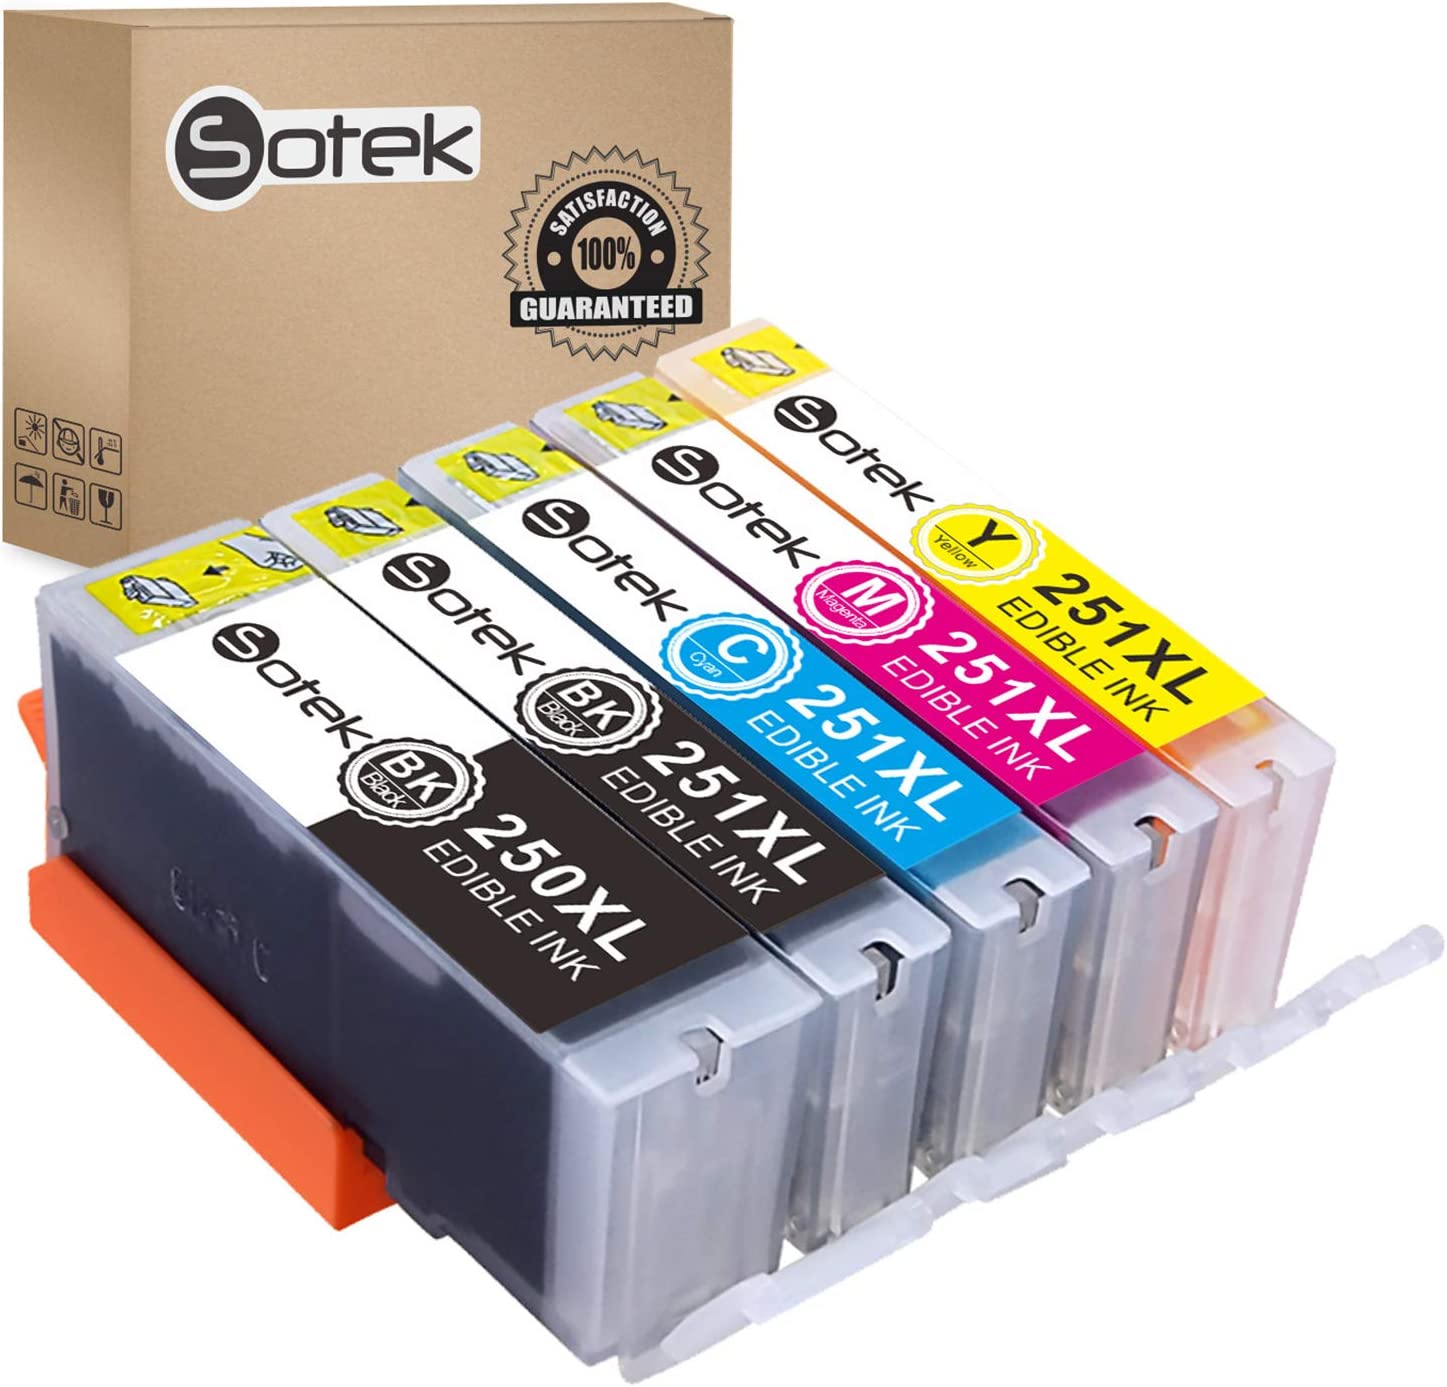 Sotek Assorted Colors Edible Ink Cartridges, 5-Pack